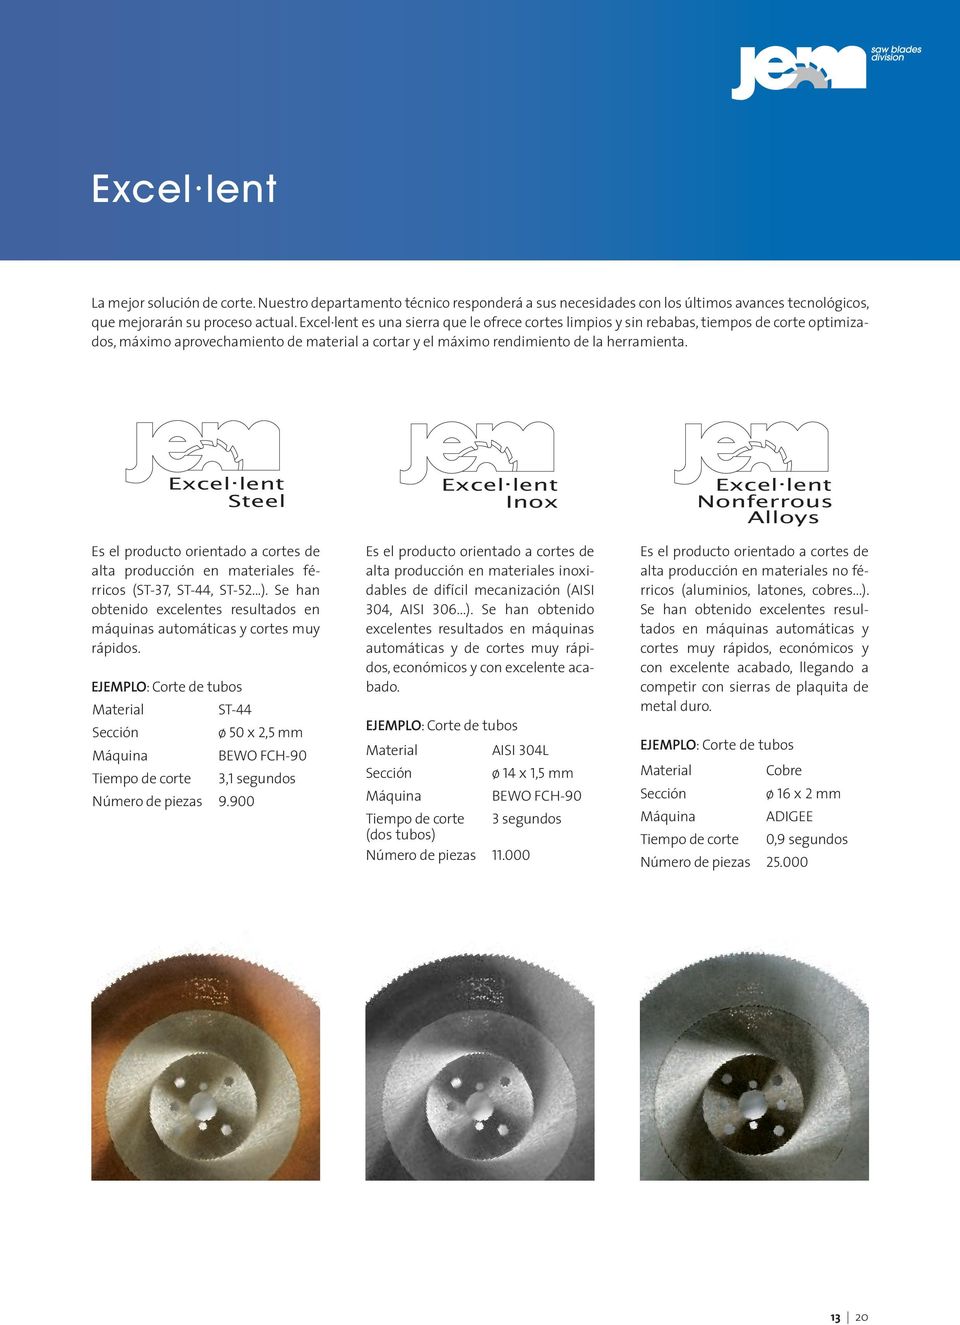 lent Excel. lent Excel. lent Steel Inox Nonferrous Alloys Es el producto orientado a cortes de alta producción en materiales férricos (ST-37, ST-44, ST-52...).